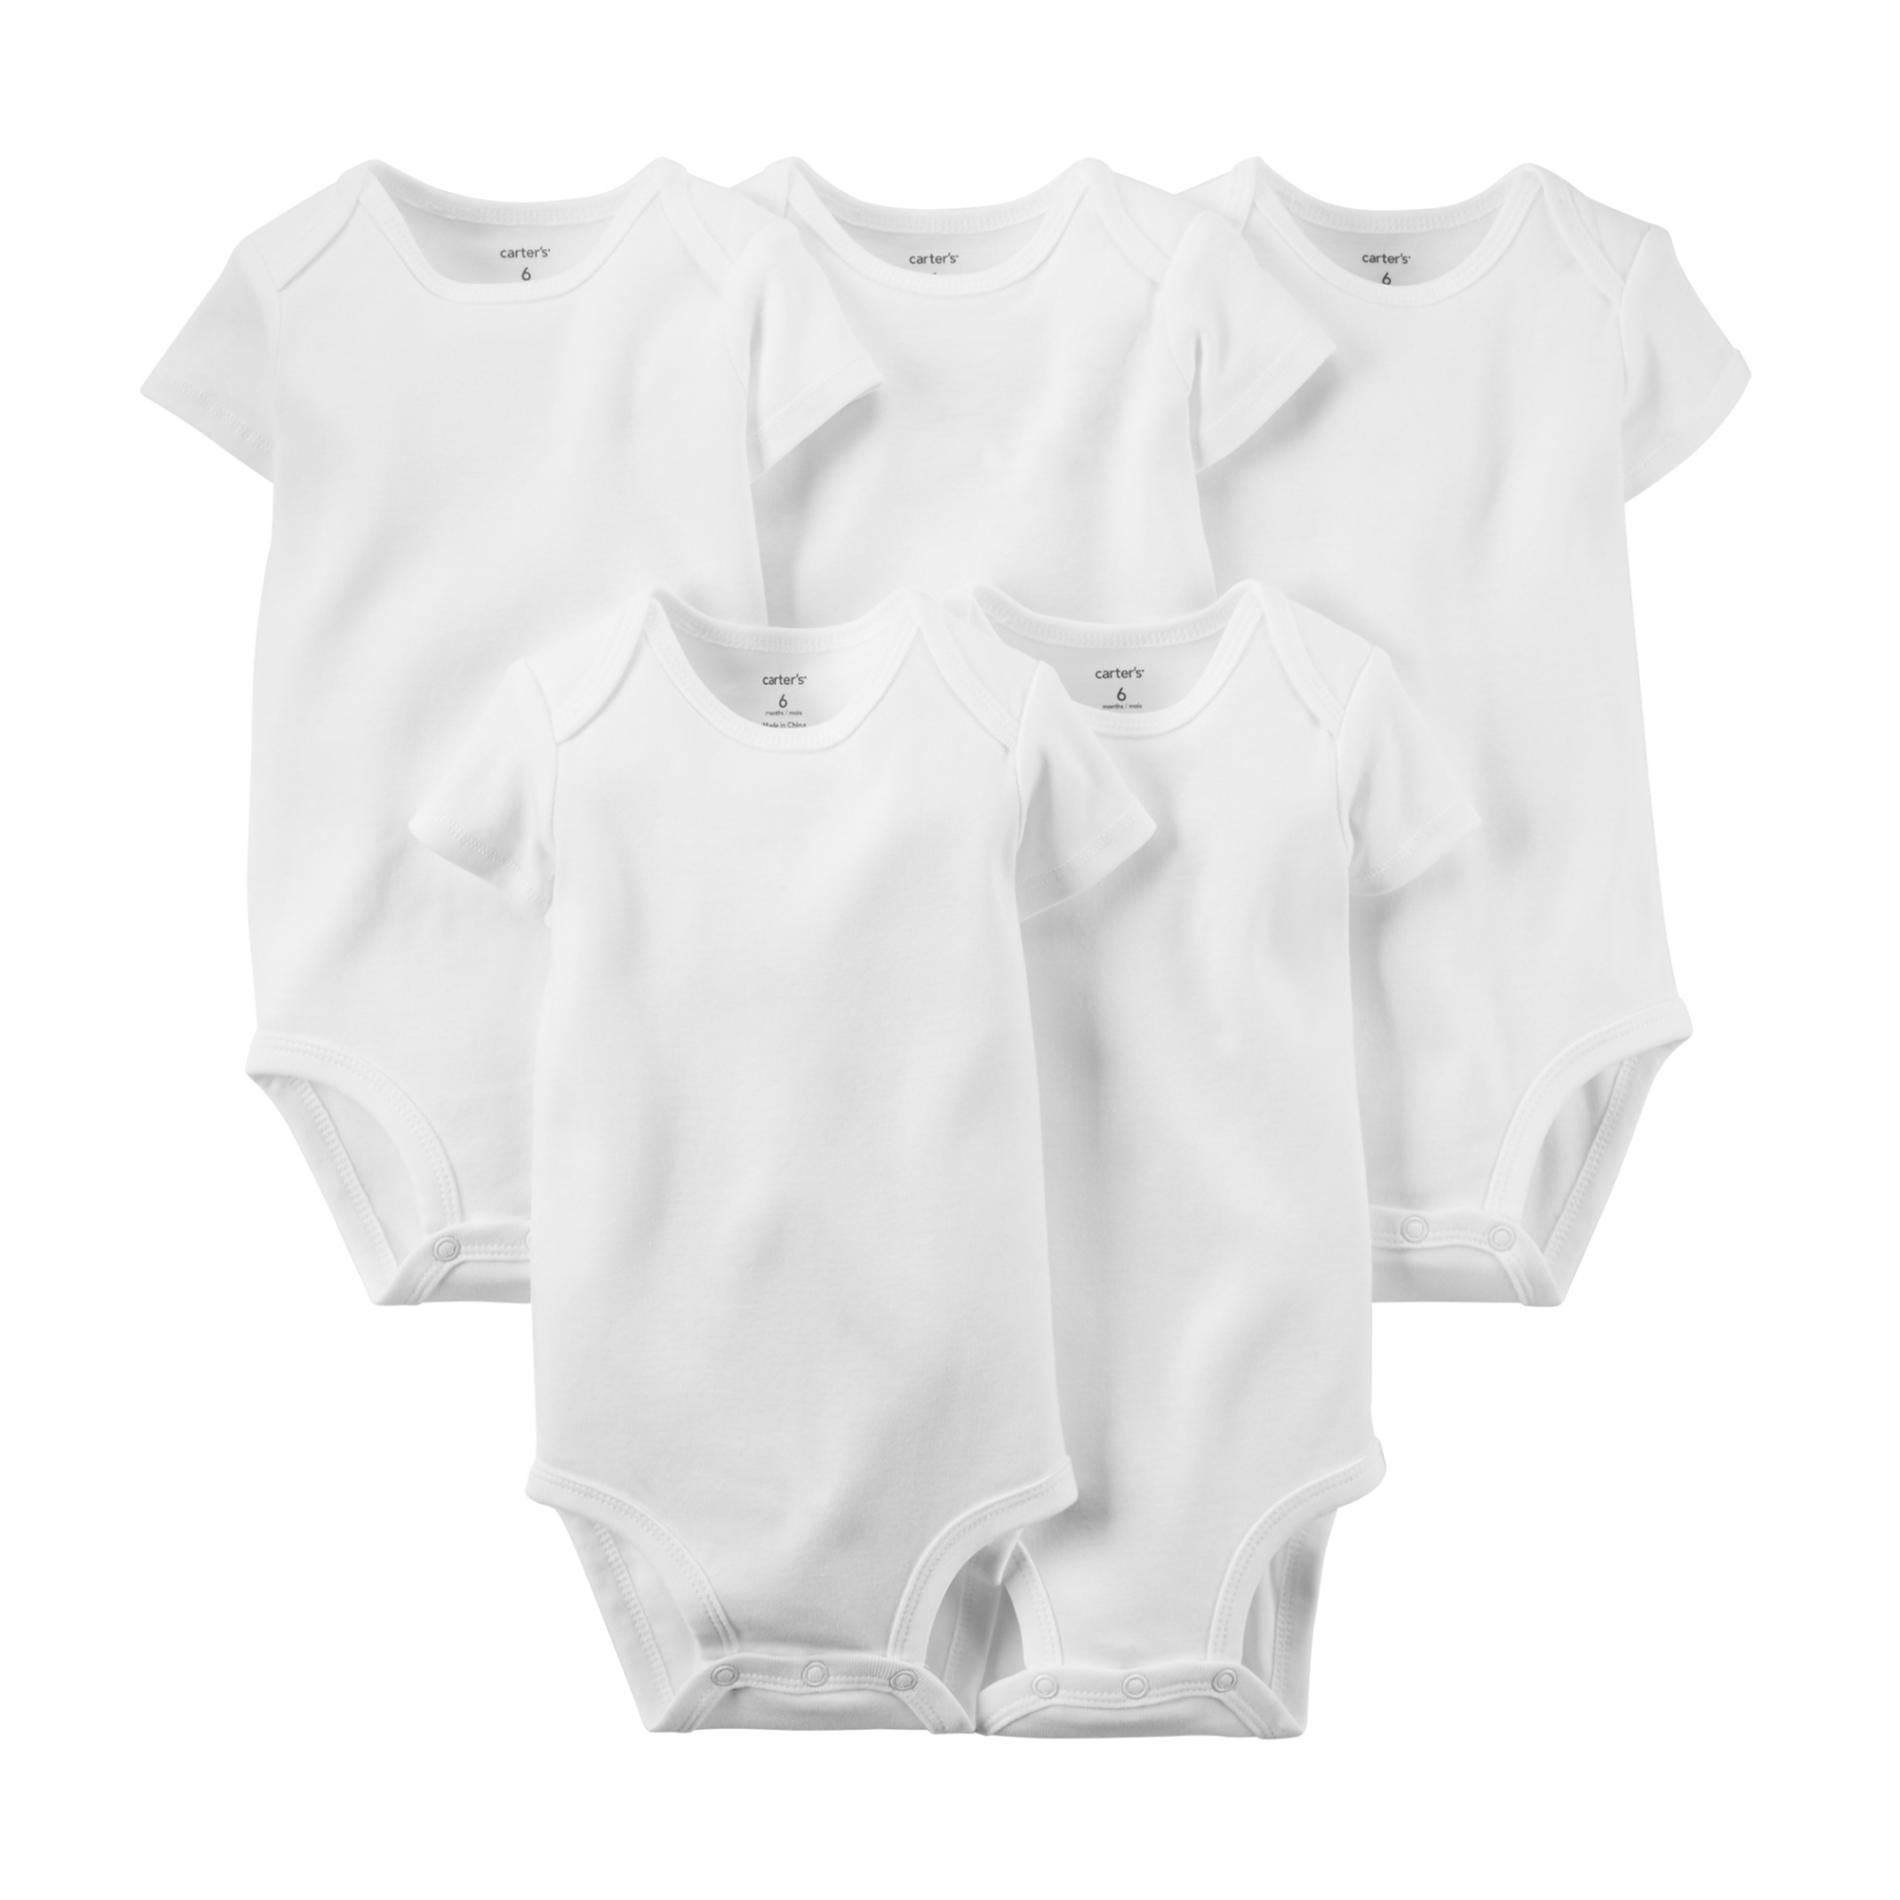 Carter's Newborn & Infant's 5-Pack Short-Sleeve Bodysuits